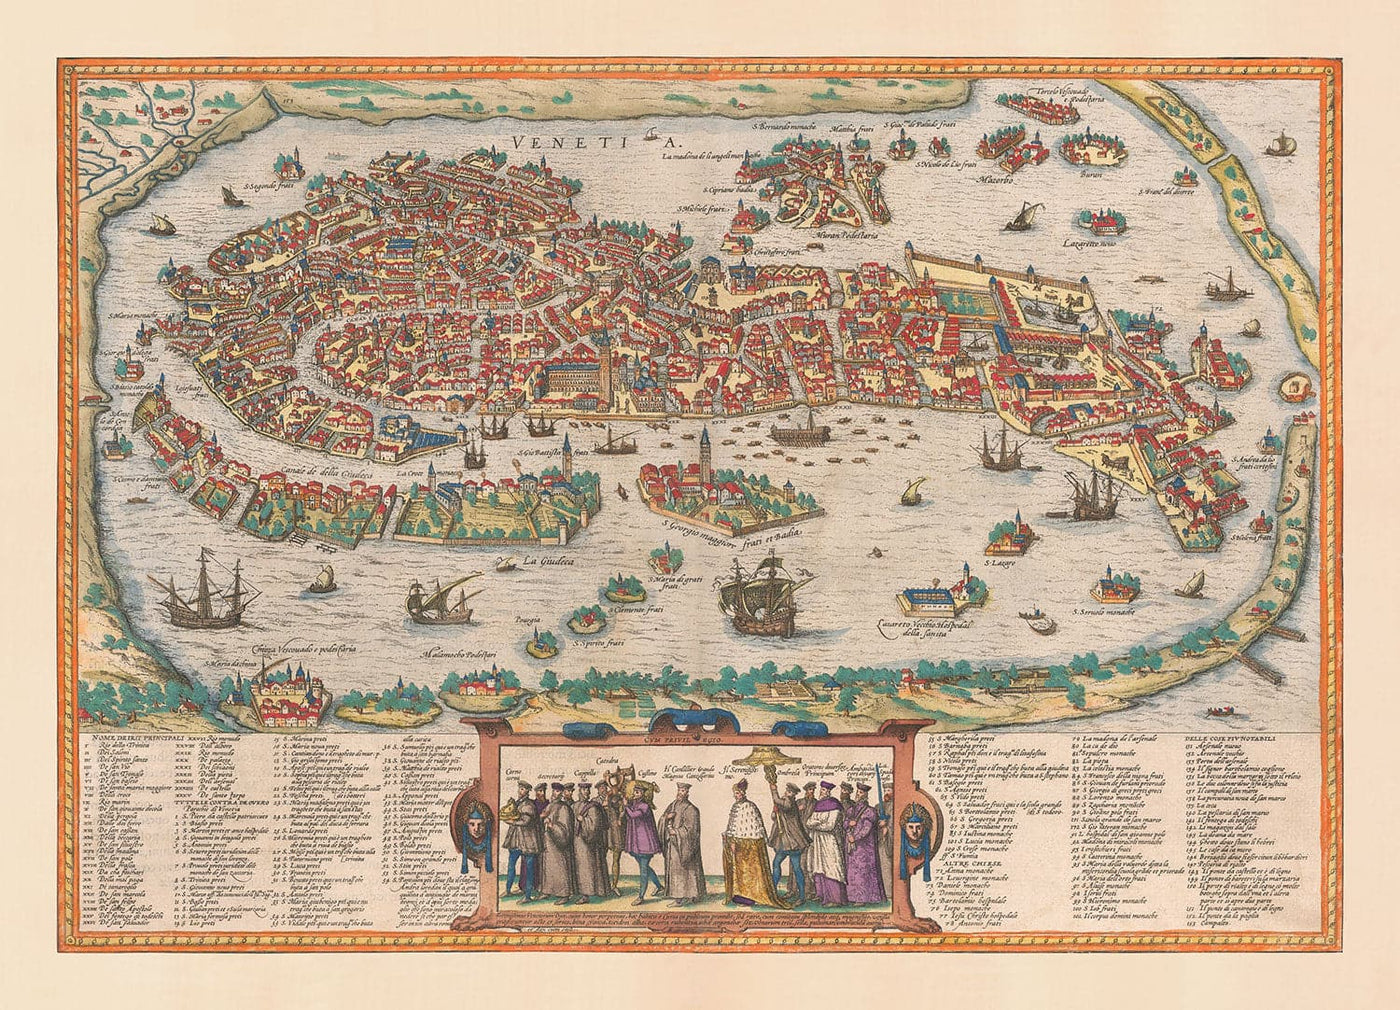 Très ancienne carte de Venise, 1572 par Georg Braun - Vénétiezia, Murano, Burano, Giudecca, Lagon vénitien